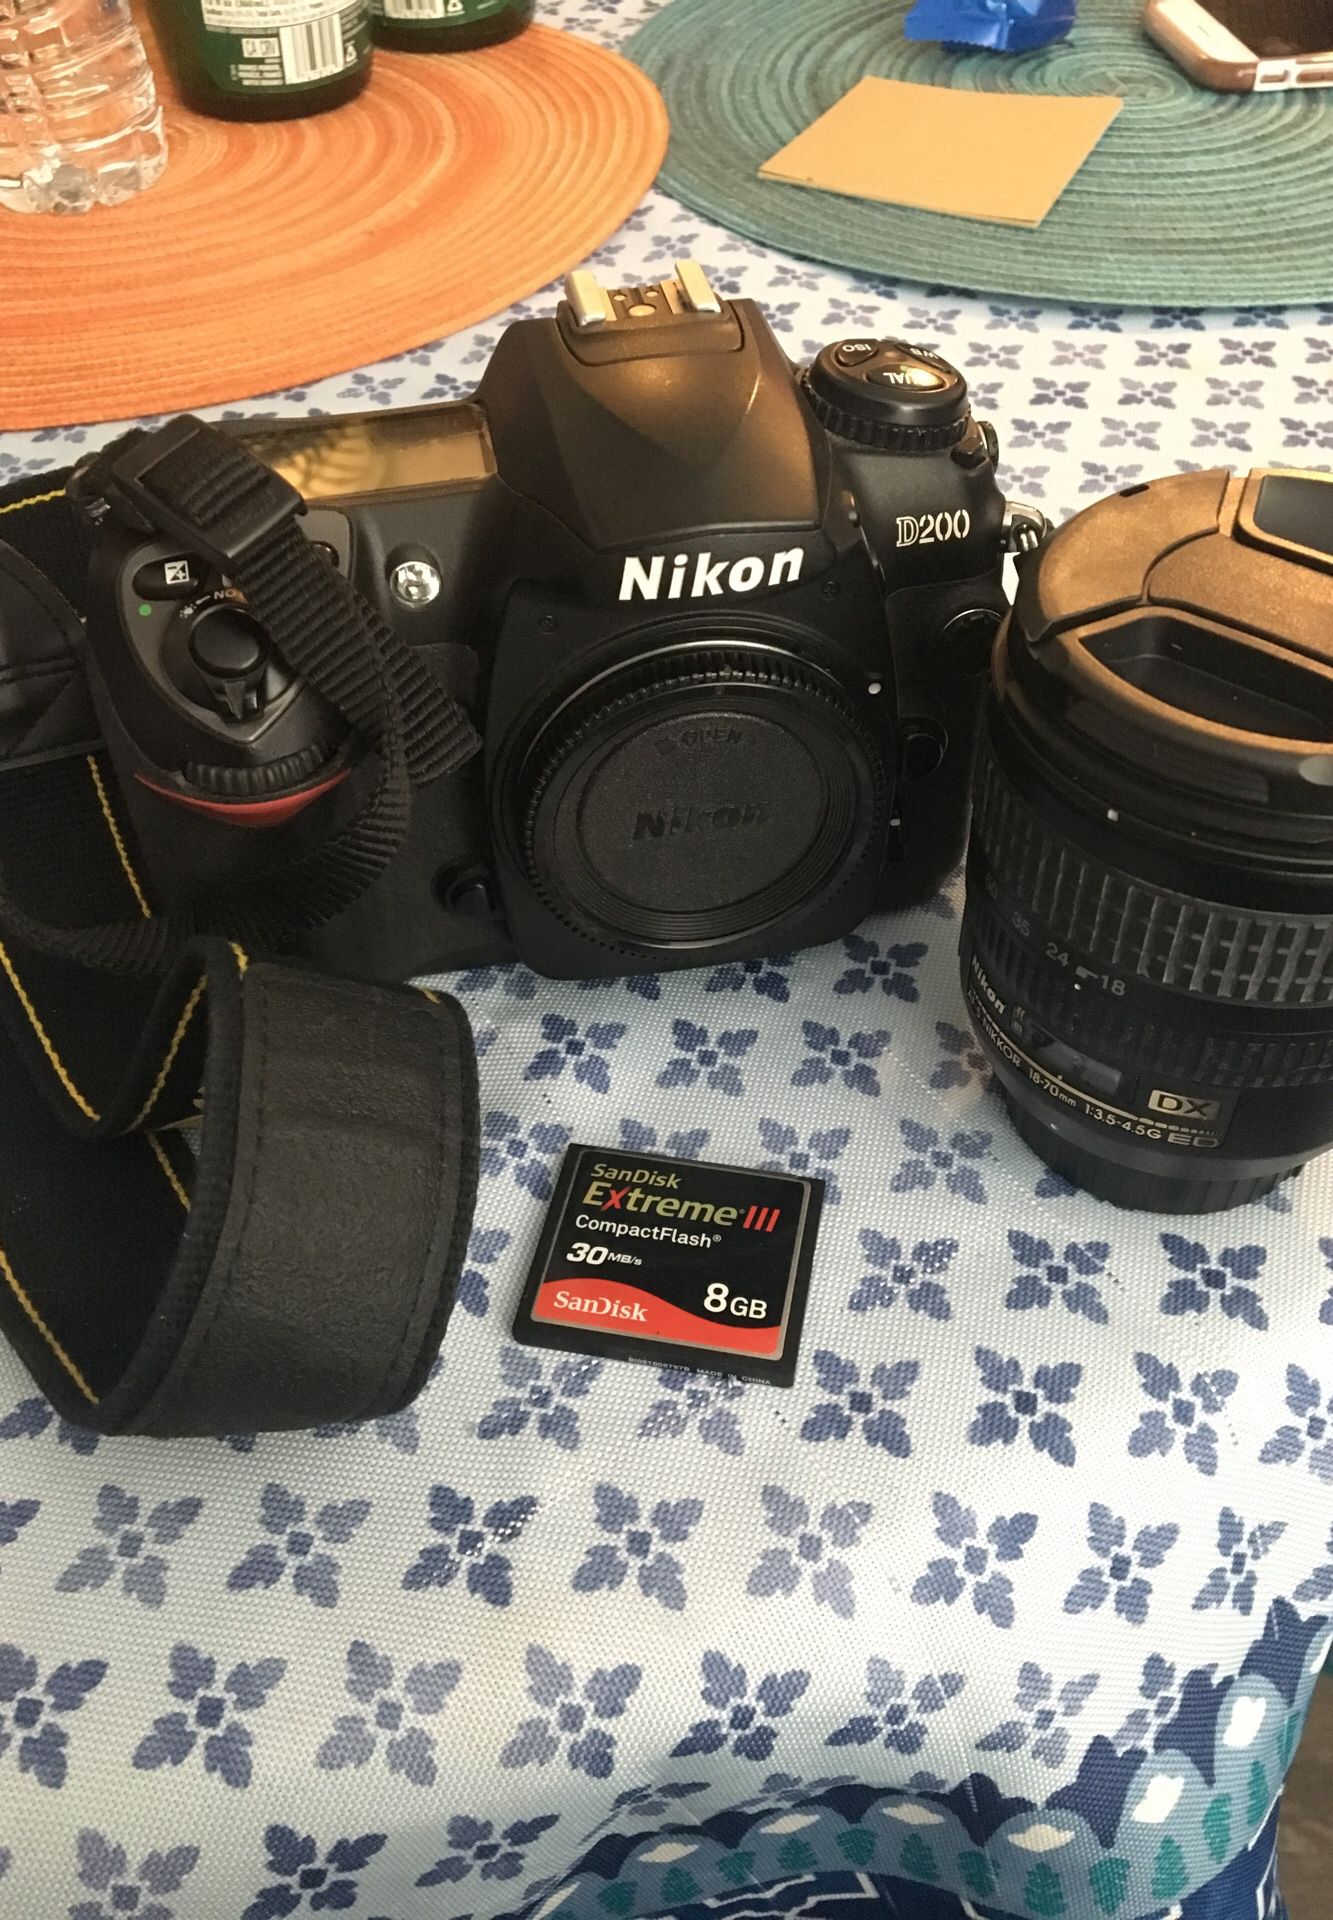 Nikon d200 with 18-70 lens